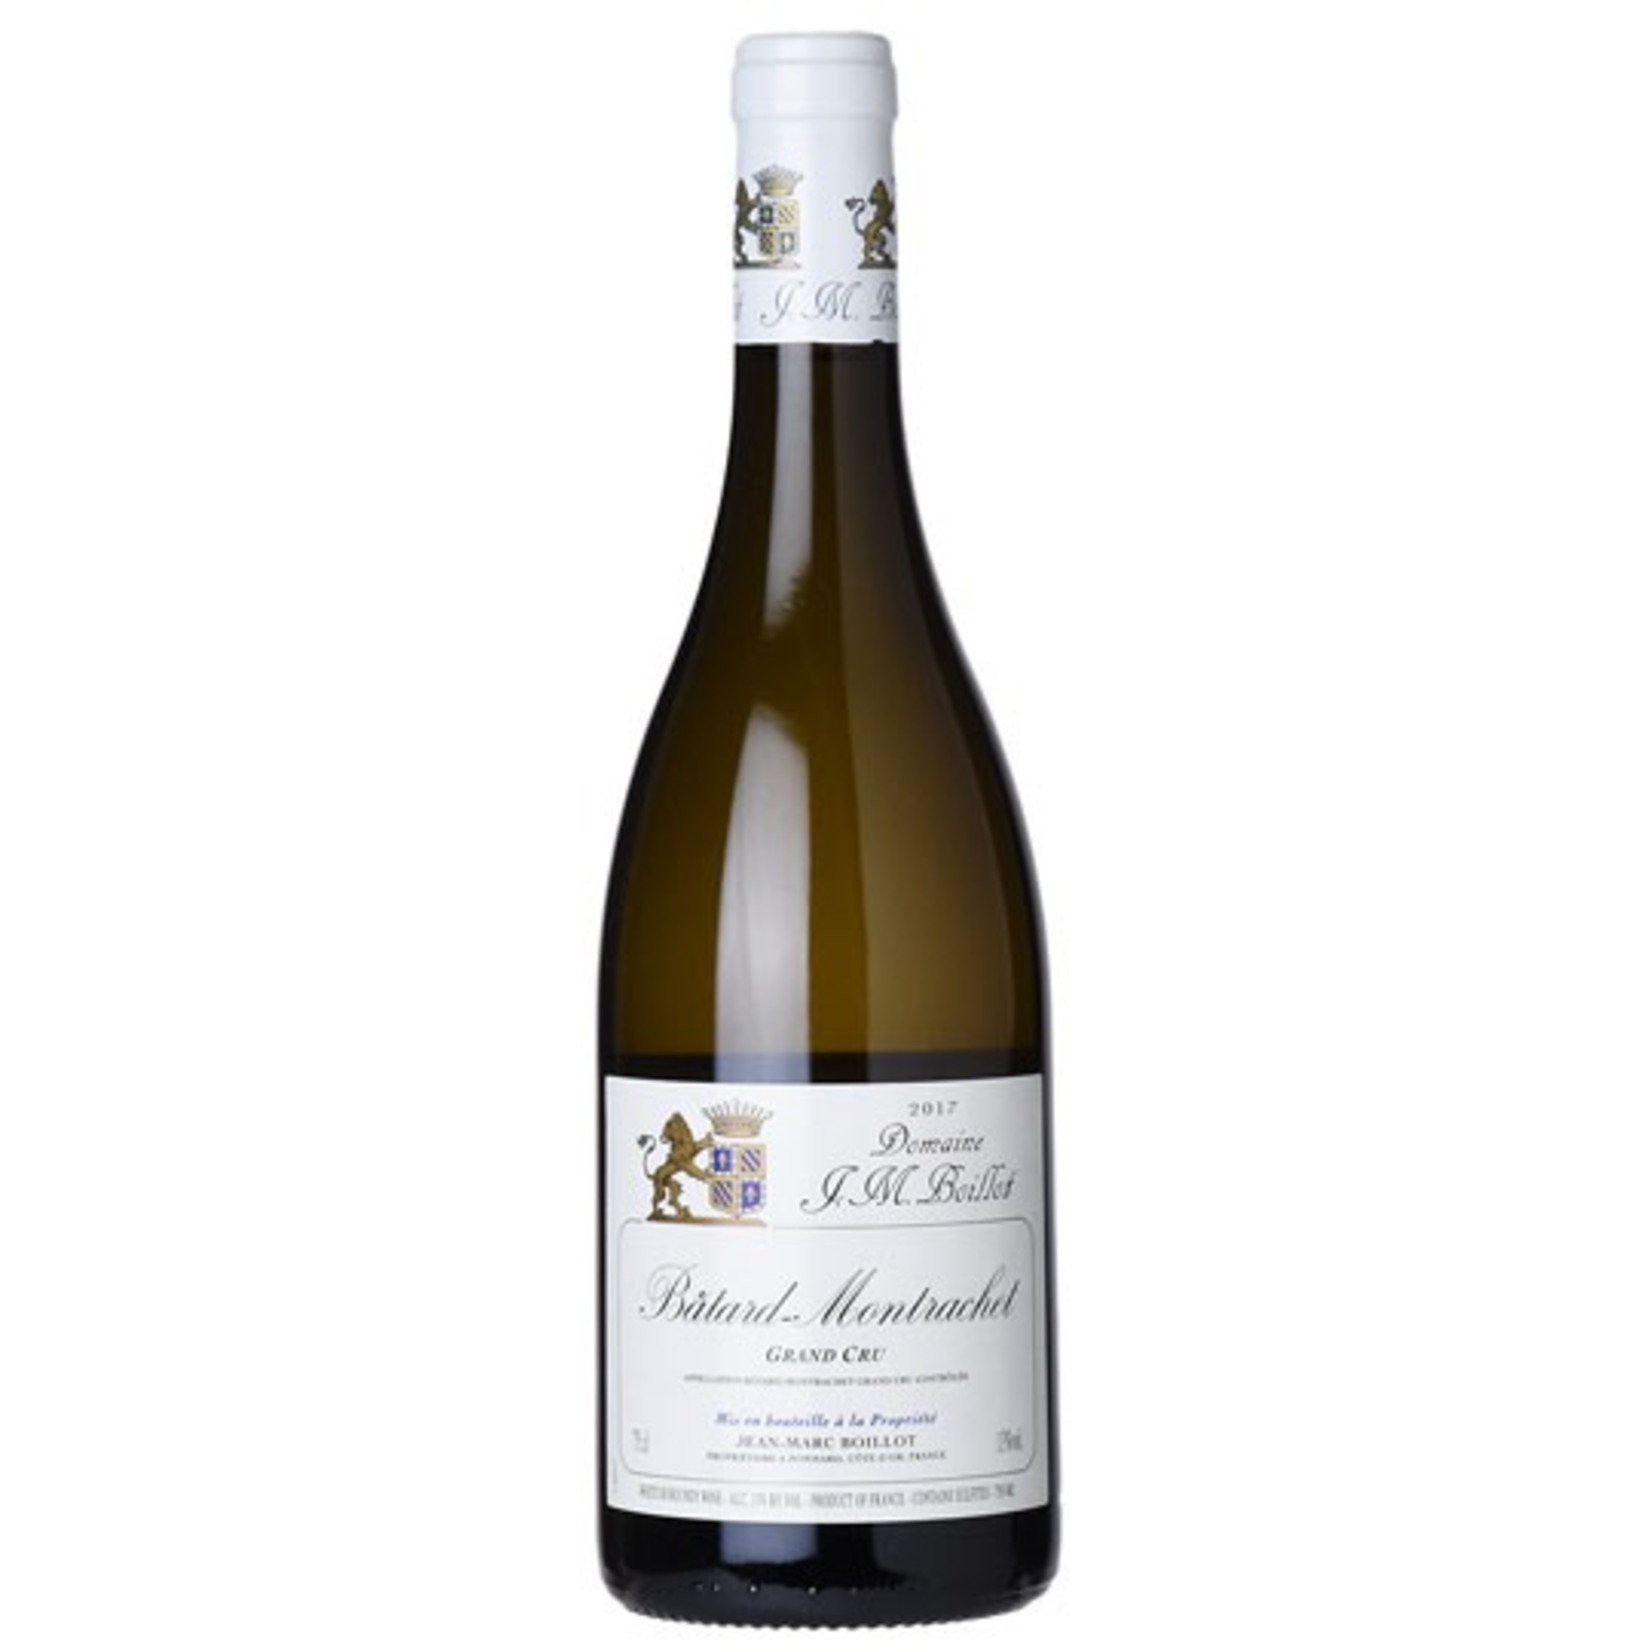 2018, J.M. Boillot Batard-Montrachet Grand Cru, Chardonnay, Batard-Montrachet, Burgundy, France, 13% Alc, CTnr